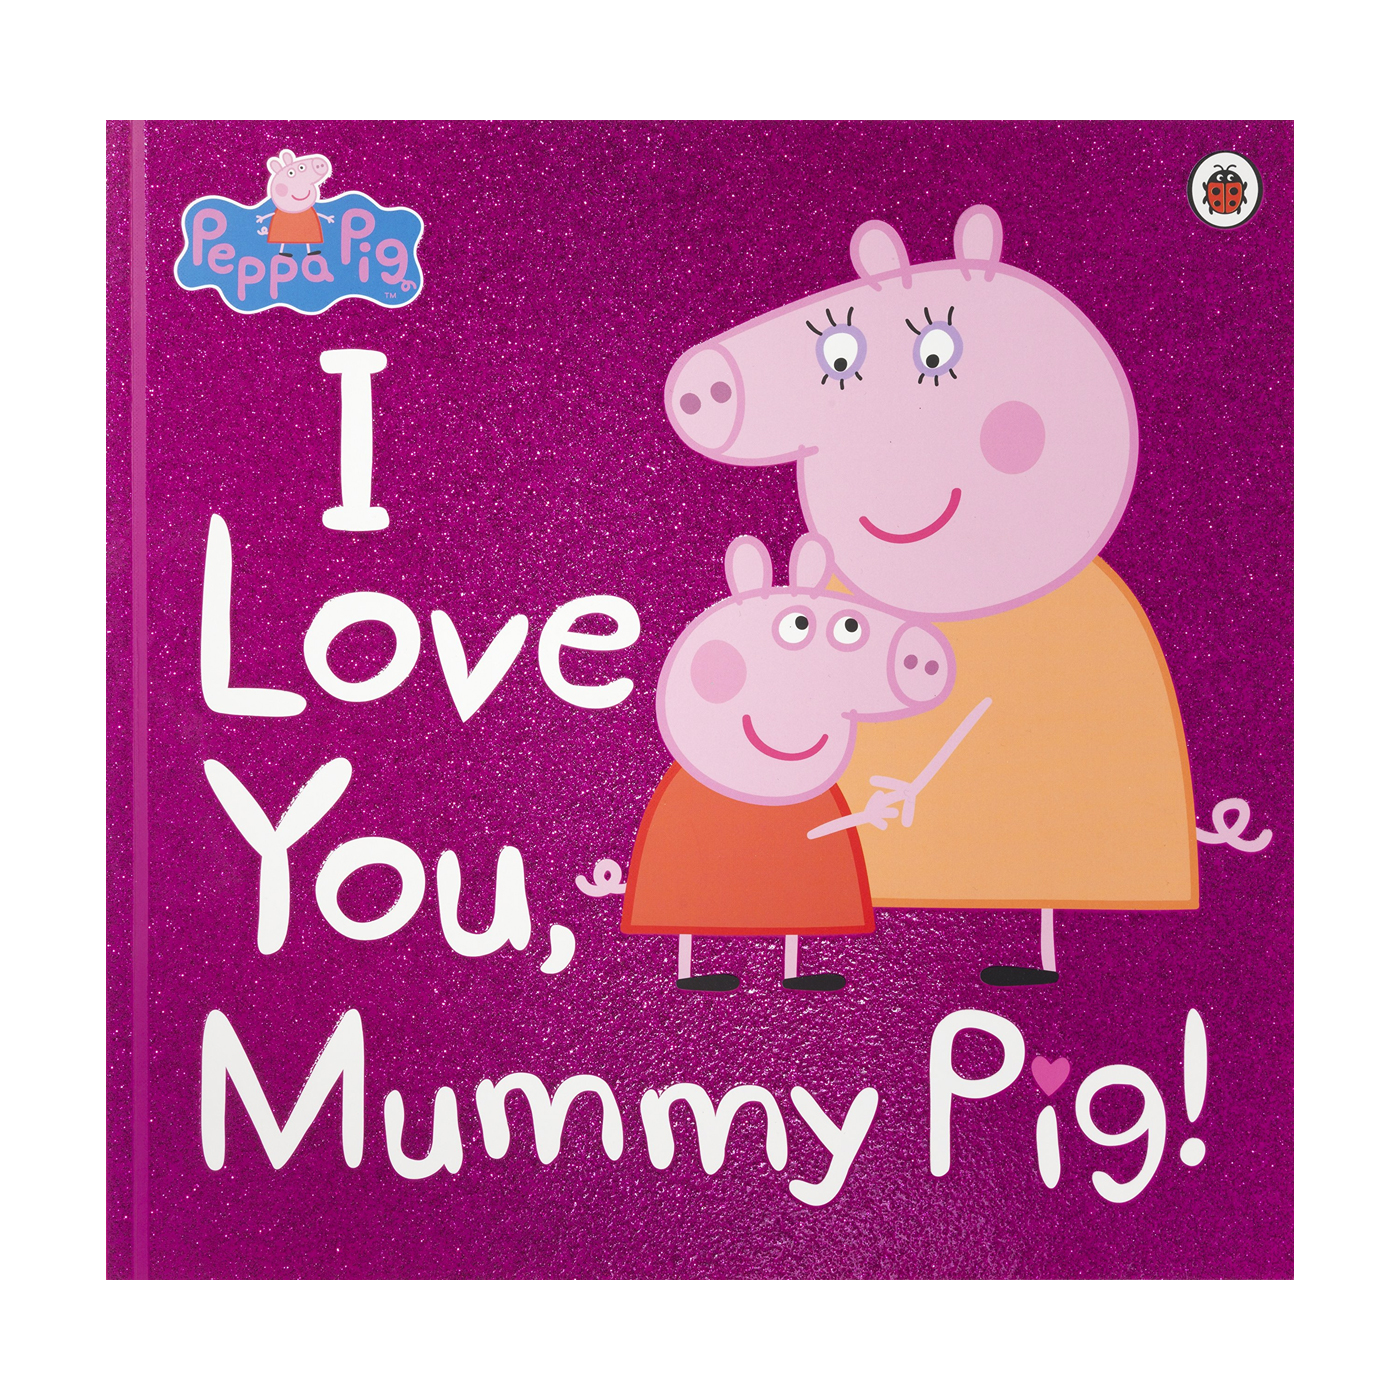  Peppa Pig: I Love You Mummy Pig